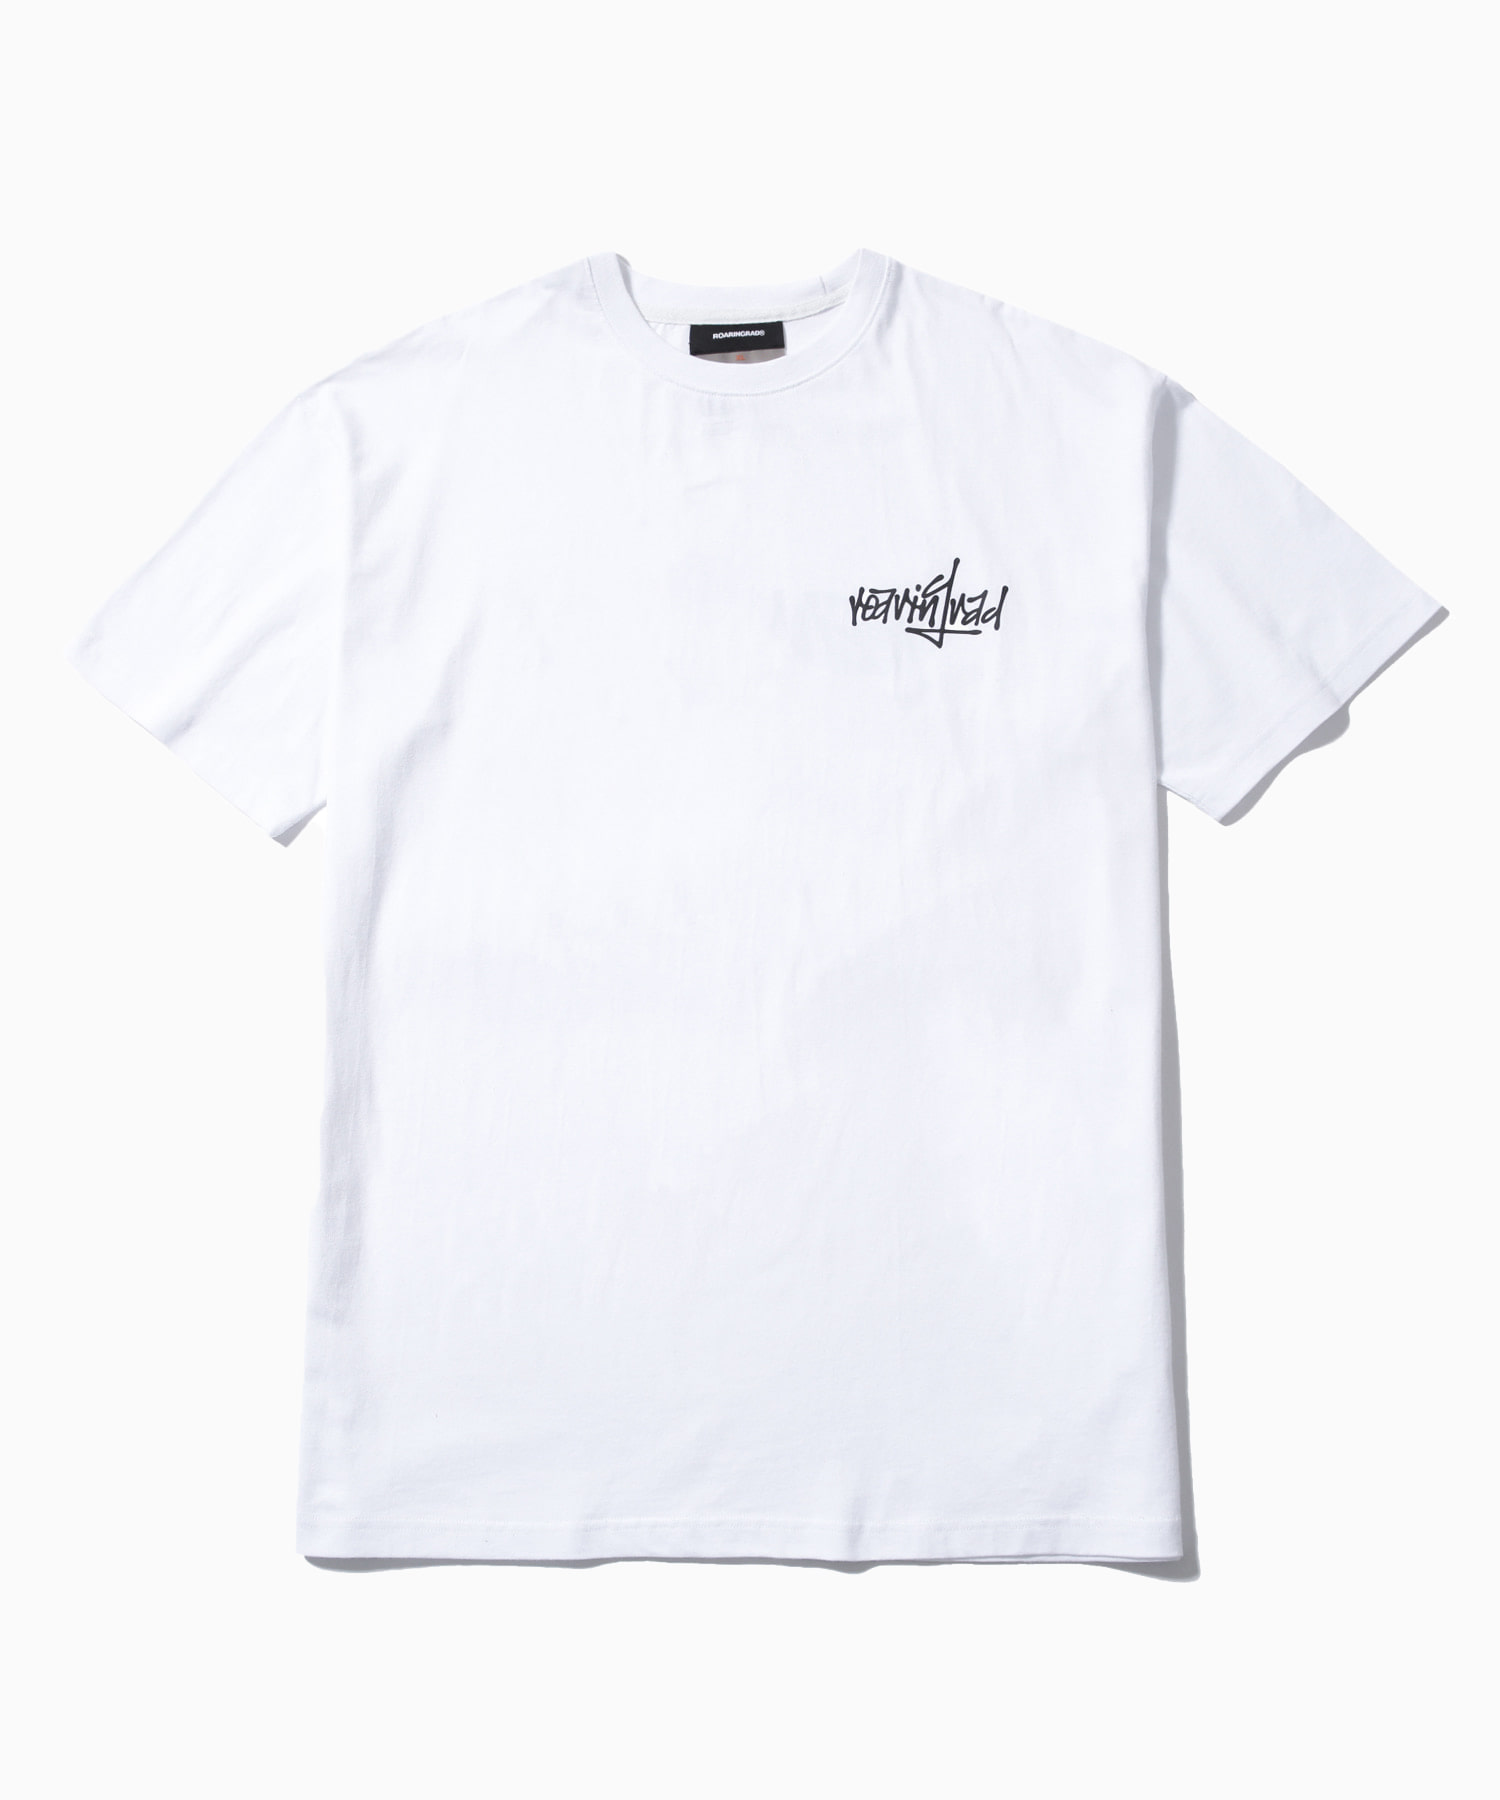 cursive logo t-shirt white - 로어링라드(ROARINGRAD)